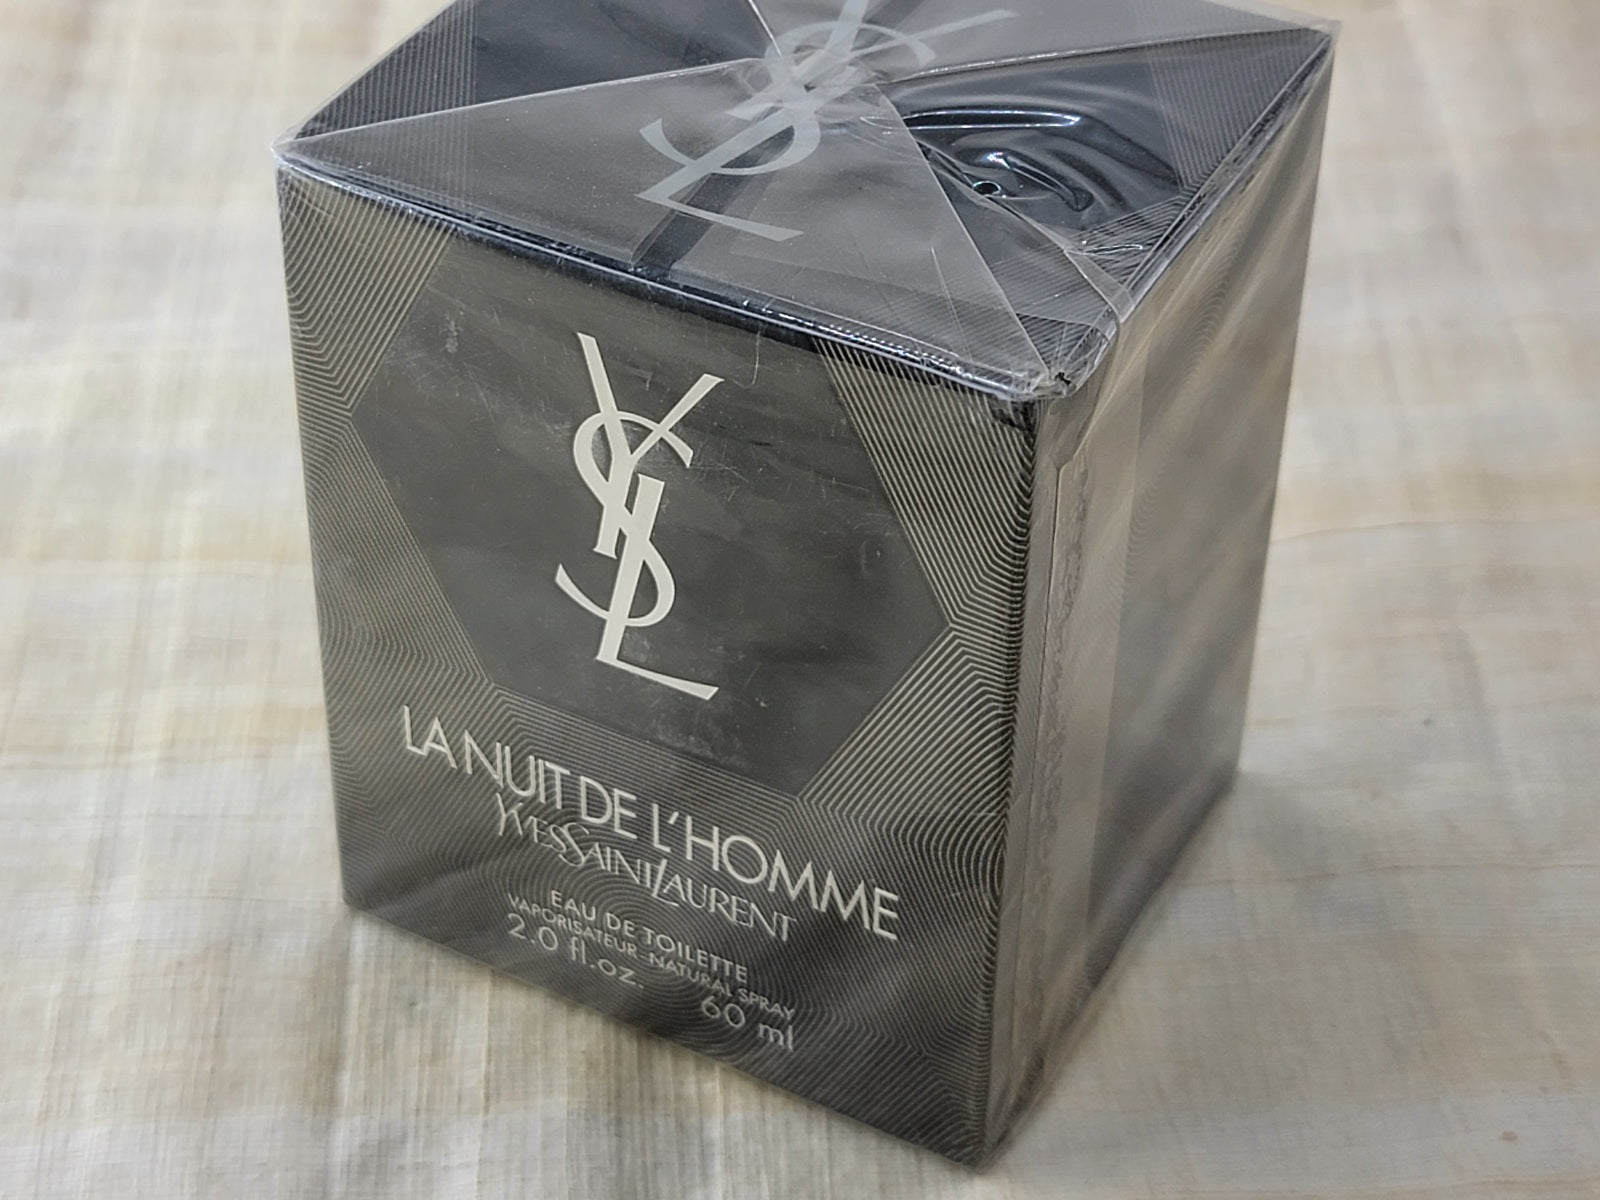 La Nuit de l'Homme 2009 First Edition Yves Saint Laurent for men EDT Spray  100 ml 3.4 oz OR 60 ml 2 oz, Vintage, Rare, Sealed